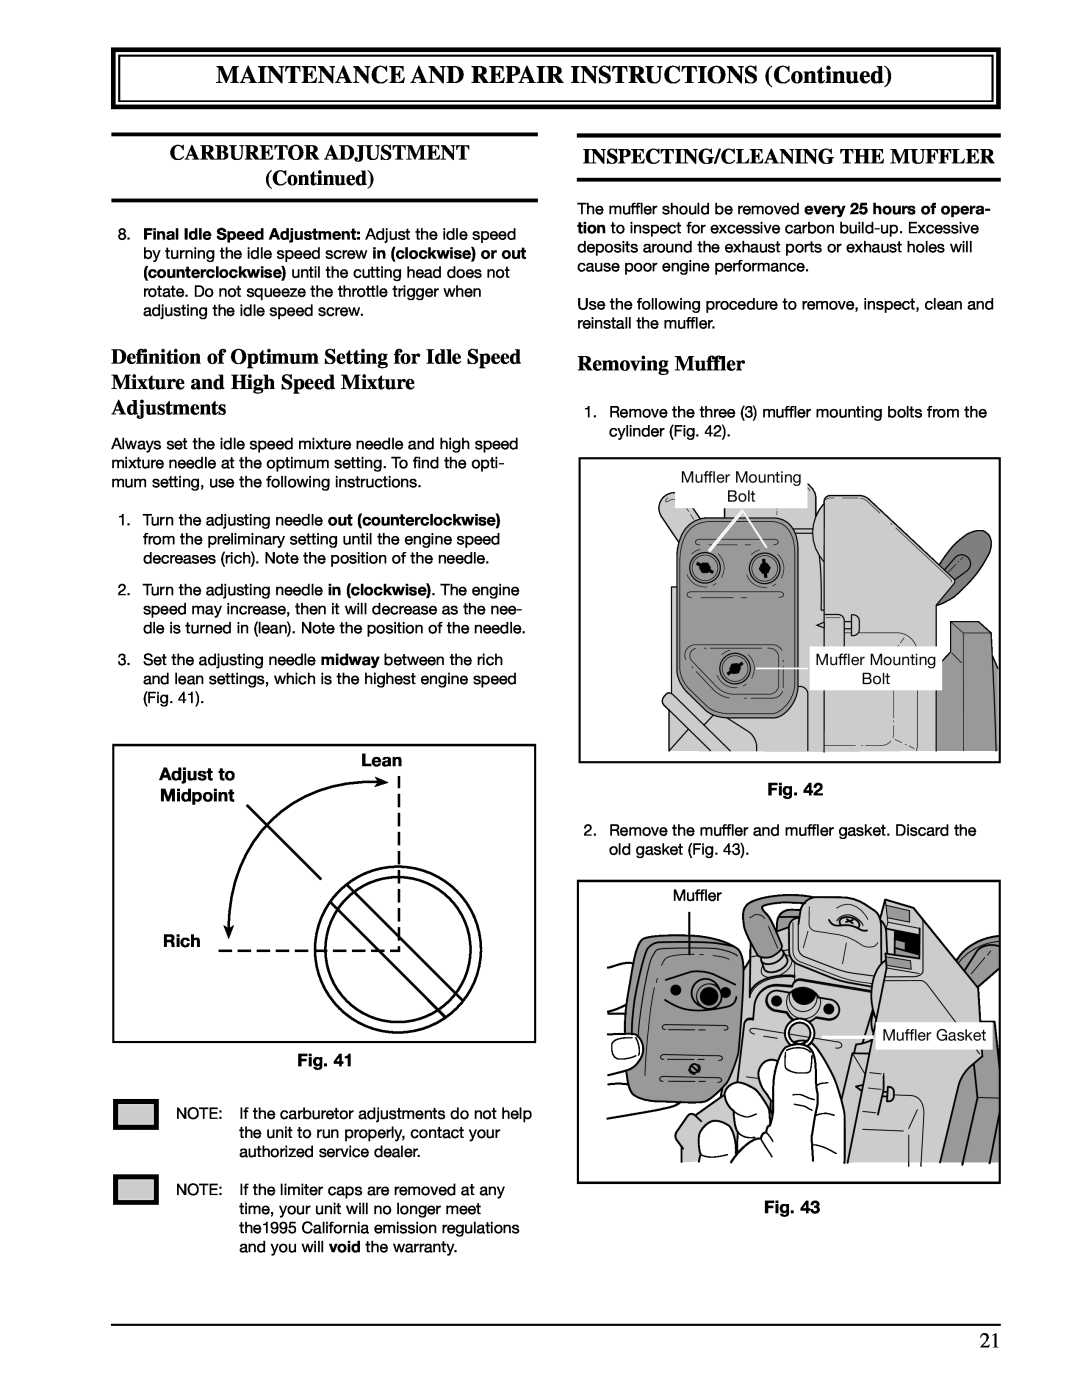 Ryobi 990r manual CARBURETOR ADJUSTMENT Continued, Inspecting/Cleaning The Muffler, Removing Muffler 